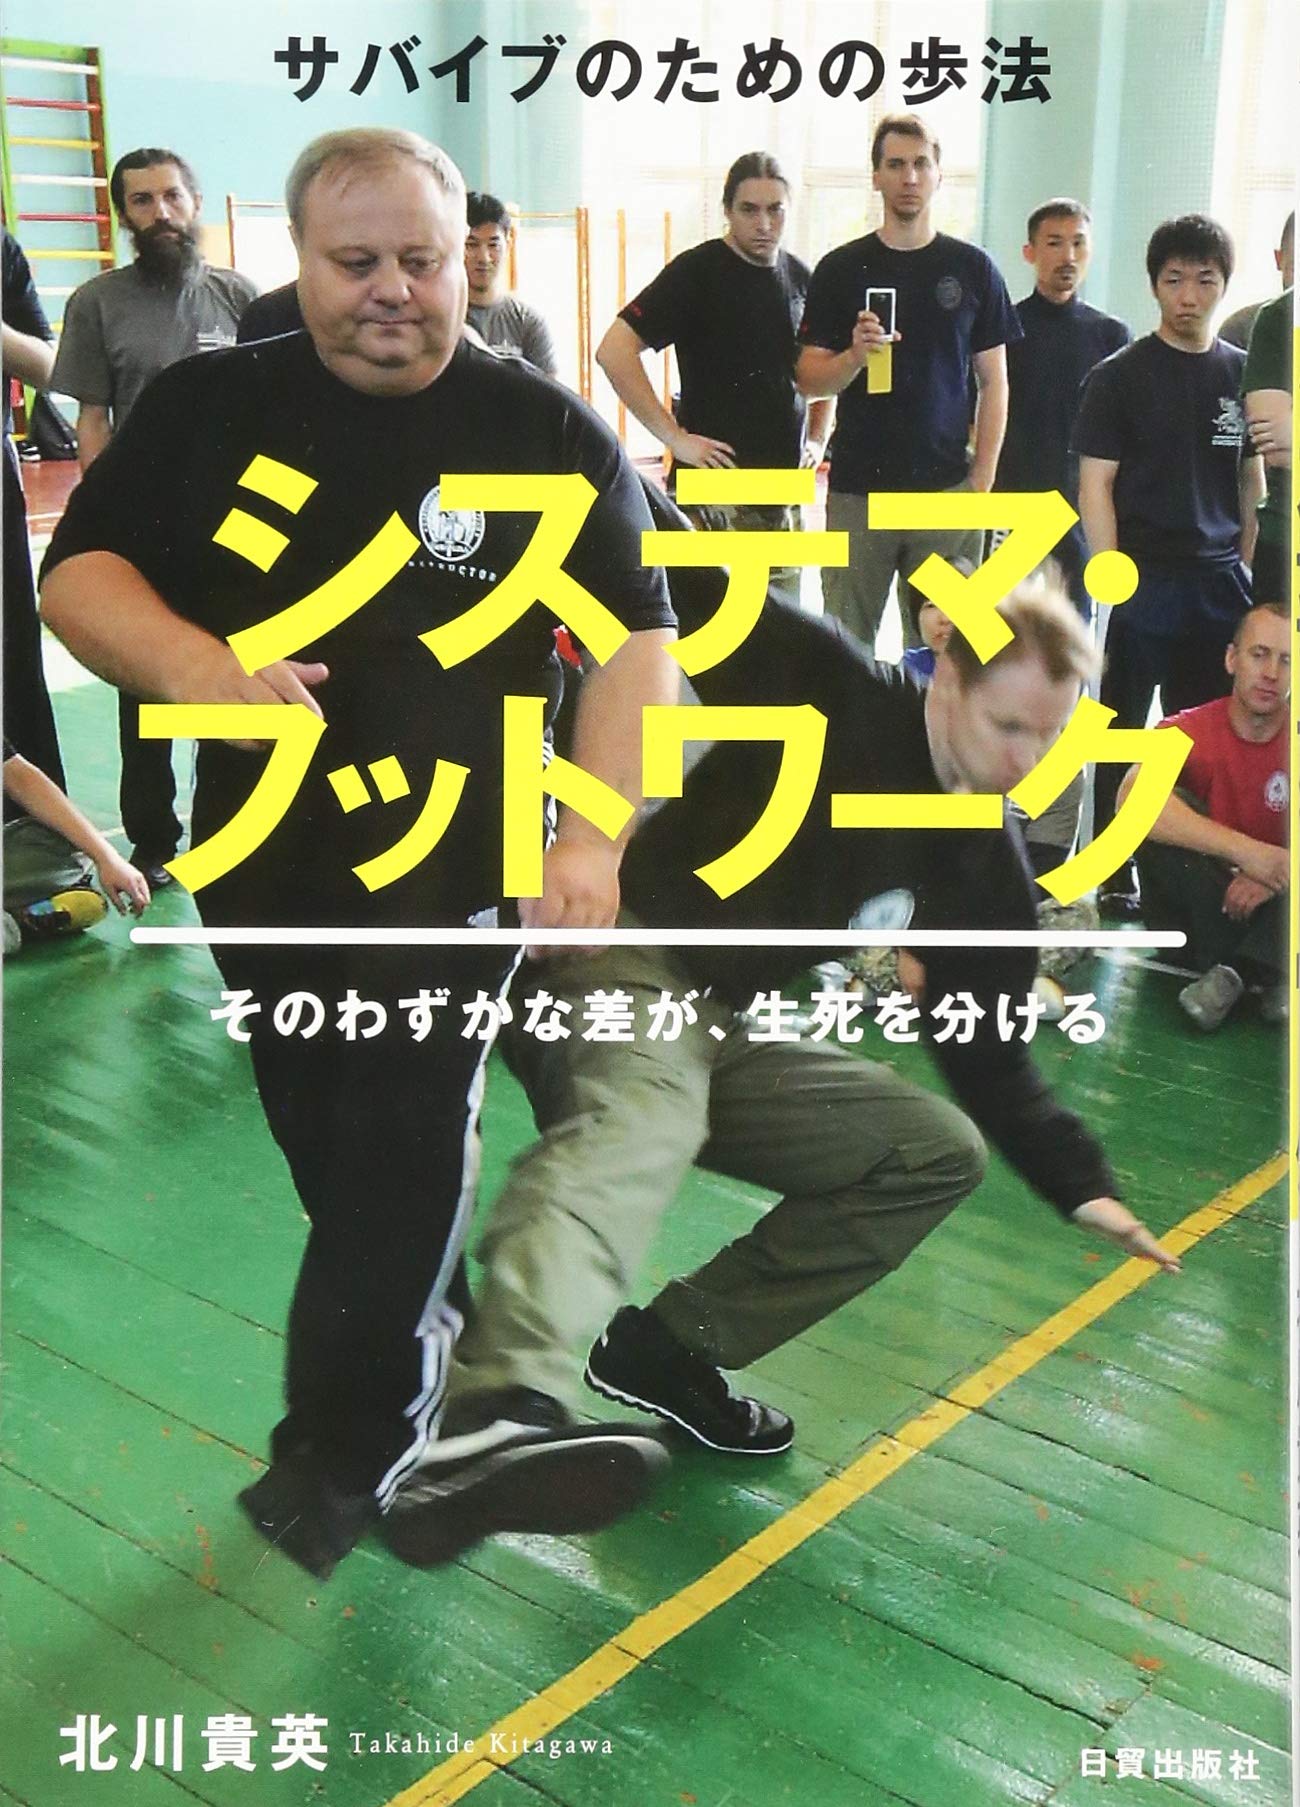 Systema Footwork Book by Takahide Kitagawa - Budovideos